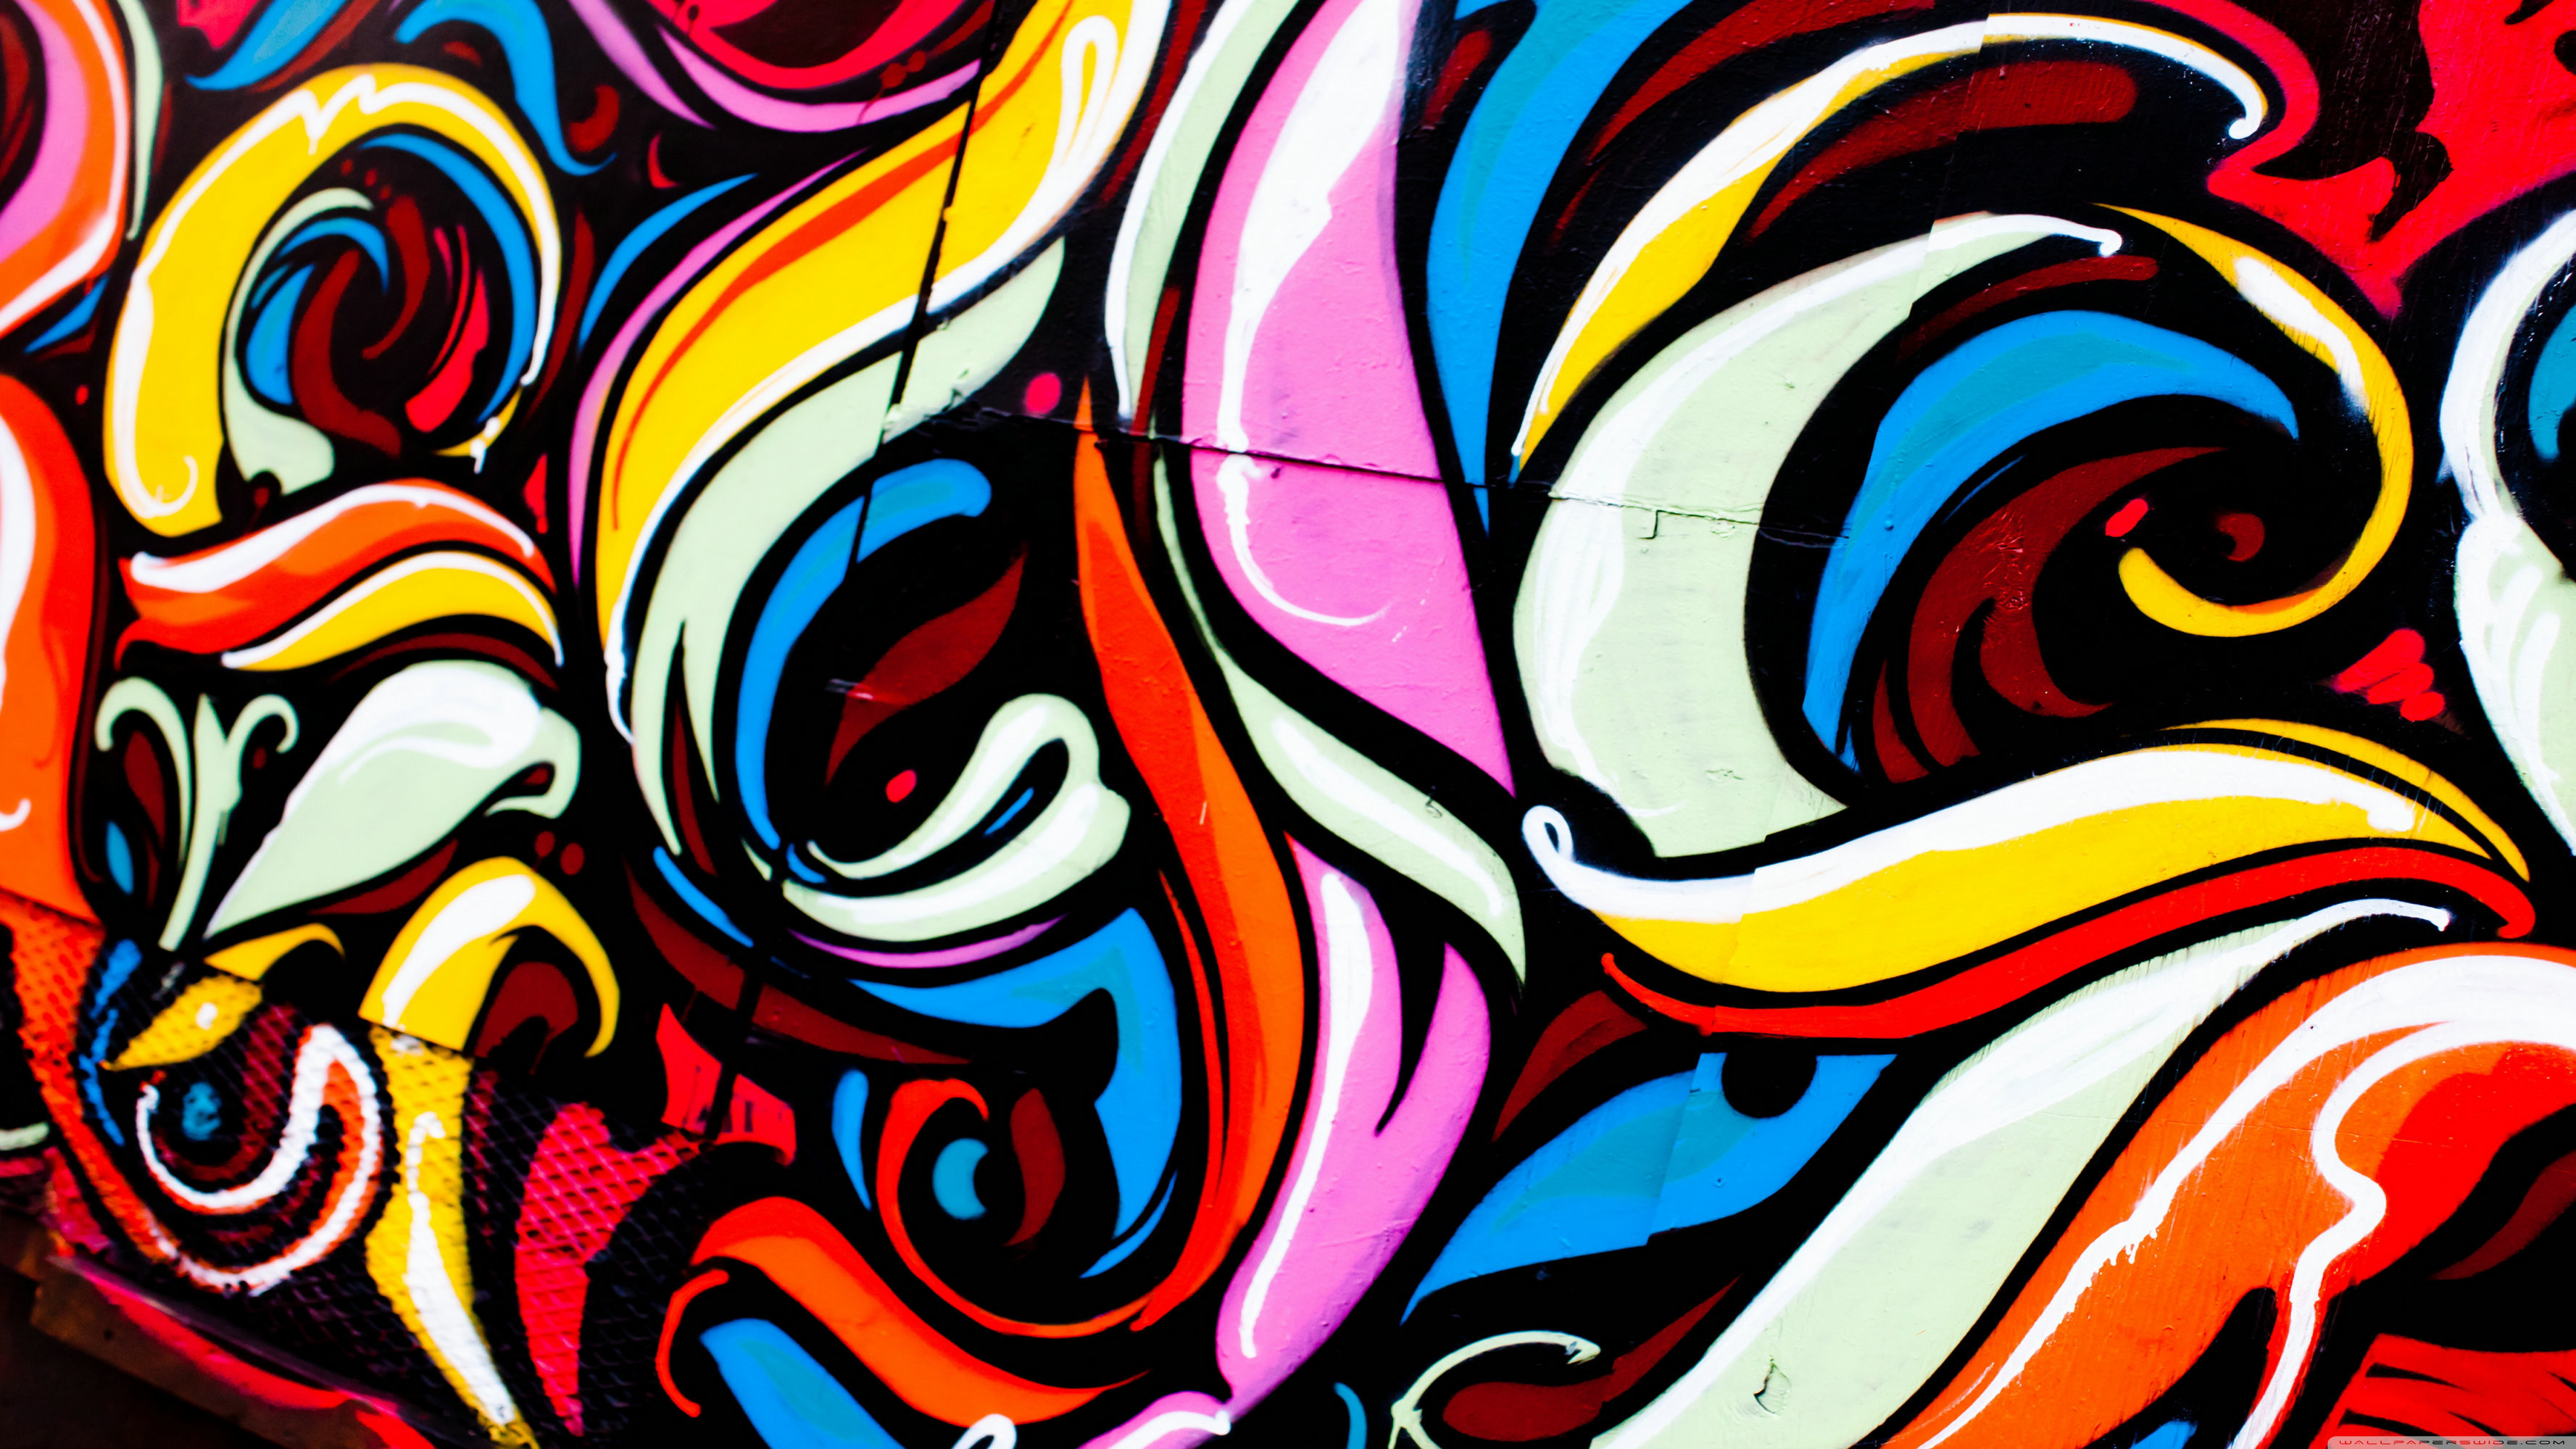 3554x1999 Cool Graffiti Wallpaper - WallpaperSafari | Graffiti | Pinterest | Graffiti  wallpaper, Graffiti and Urban art